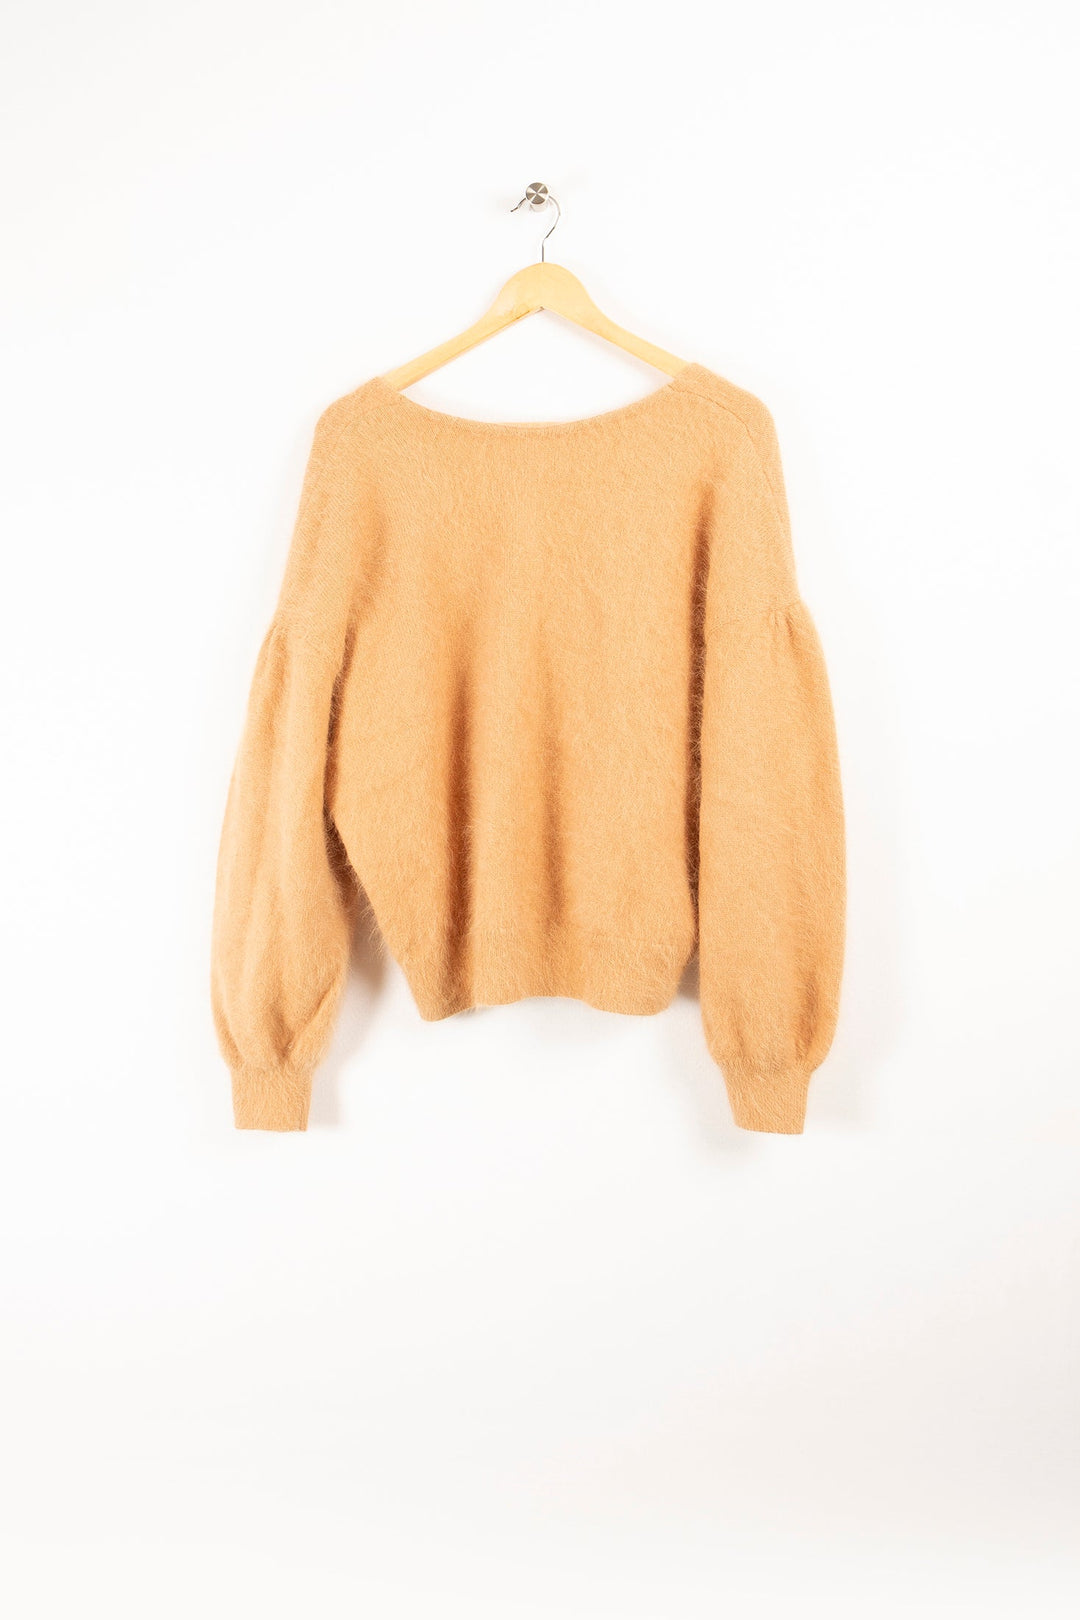 Sweater - Size L/40